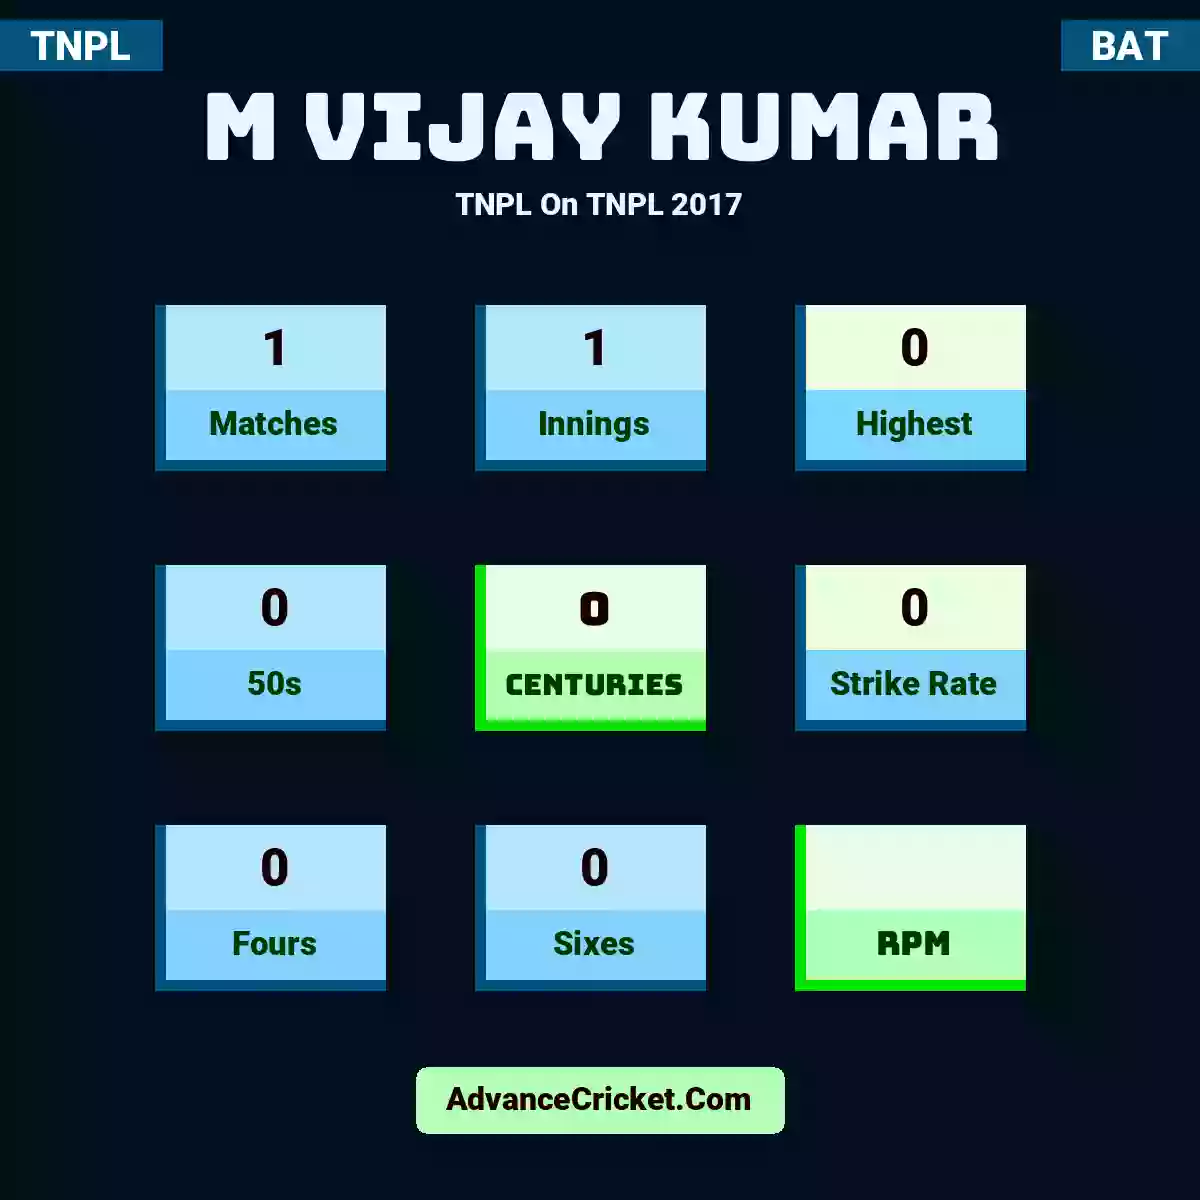 M Vijay Kumar TNPL  On TNPL 2017, M Vijay Kumar played 1 matches, scored 0 runs as highest, 0 half-centuries, and 0 centuries, with a strike rate of 0. M.Kumar hit 0 fours and 0 sixes.